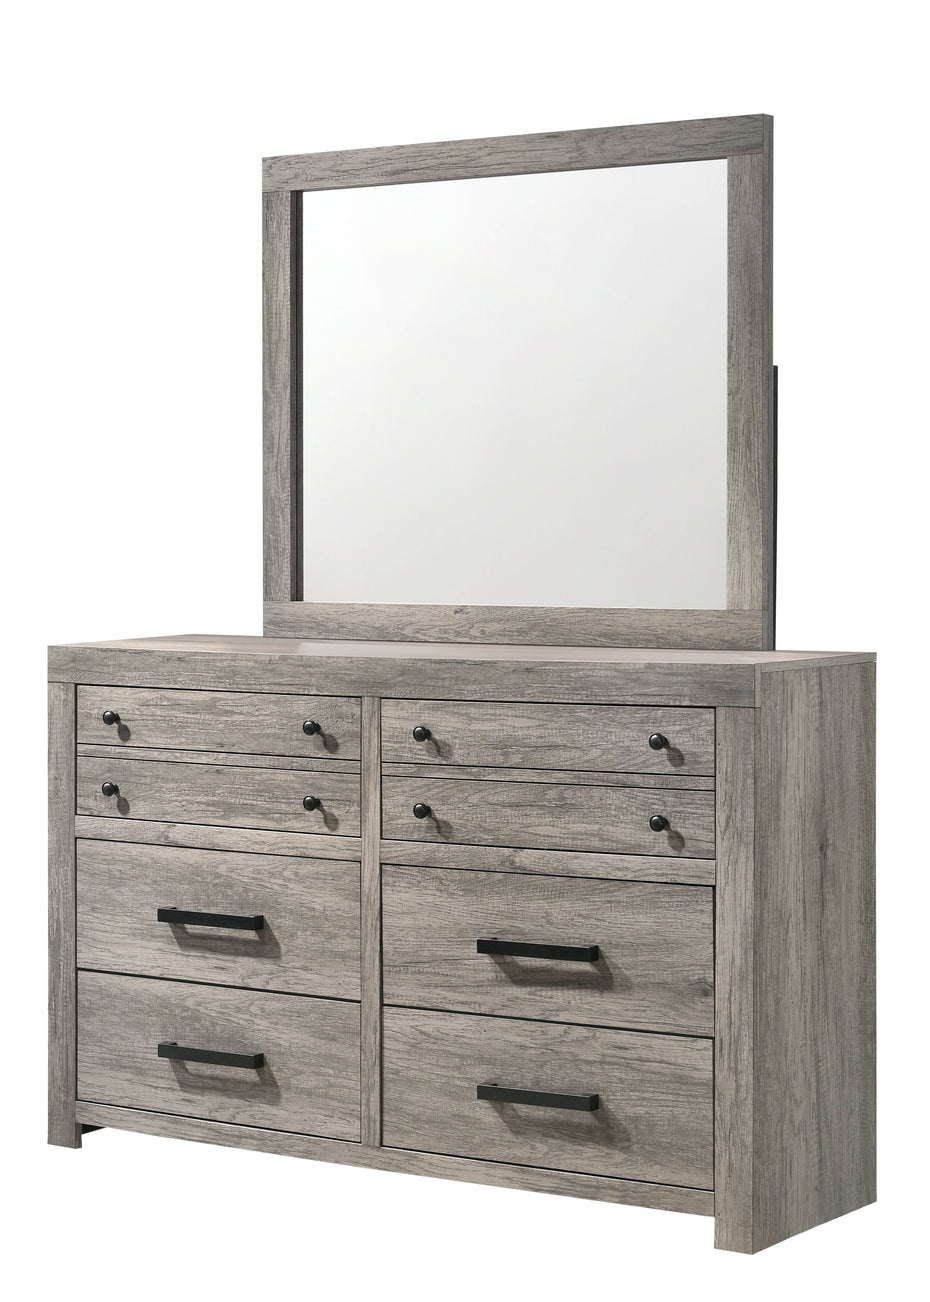 Tundra - Dresser, Mirror